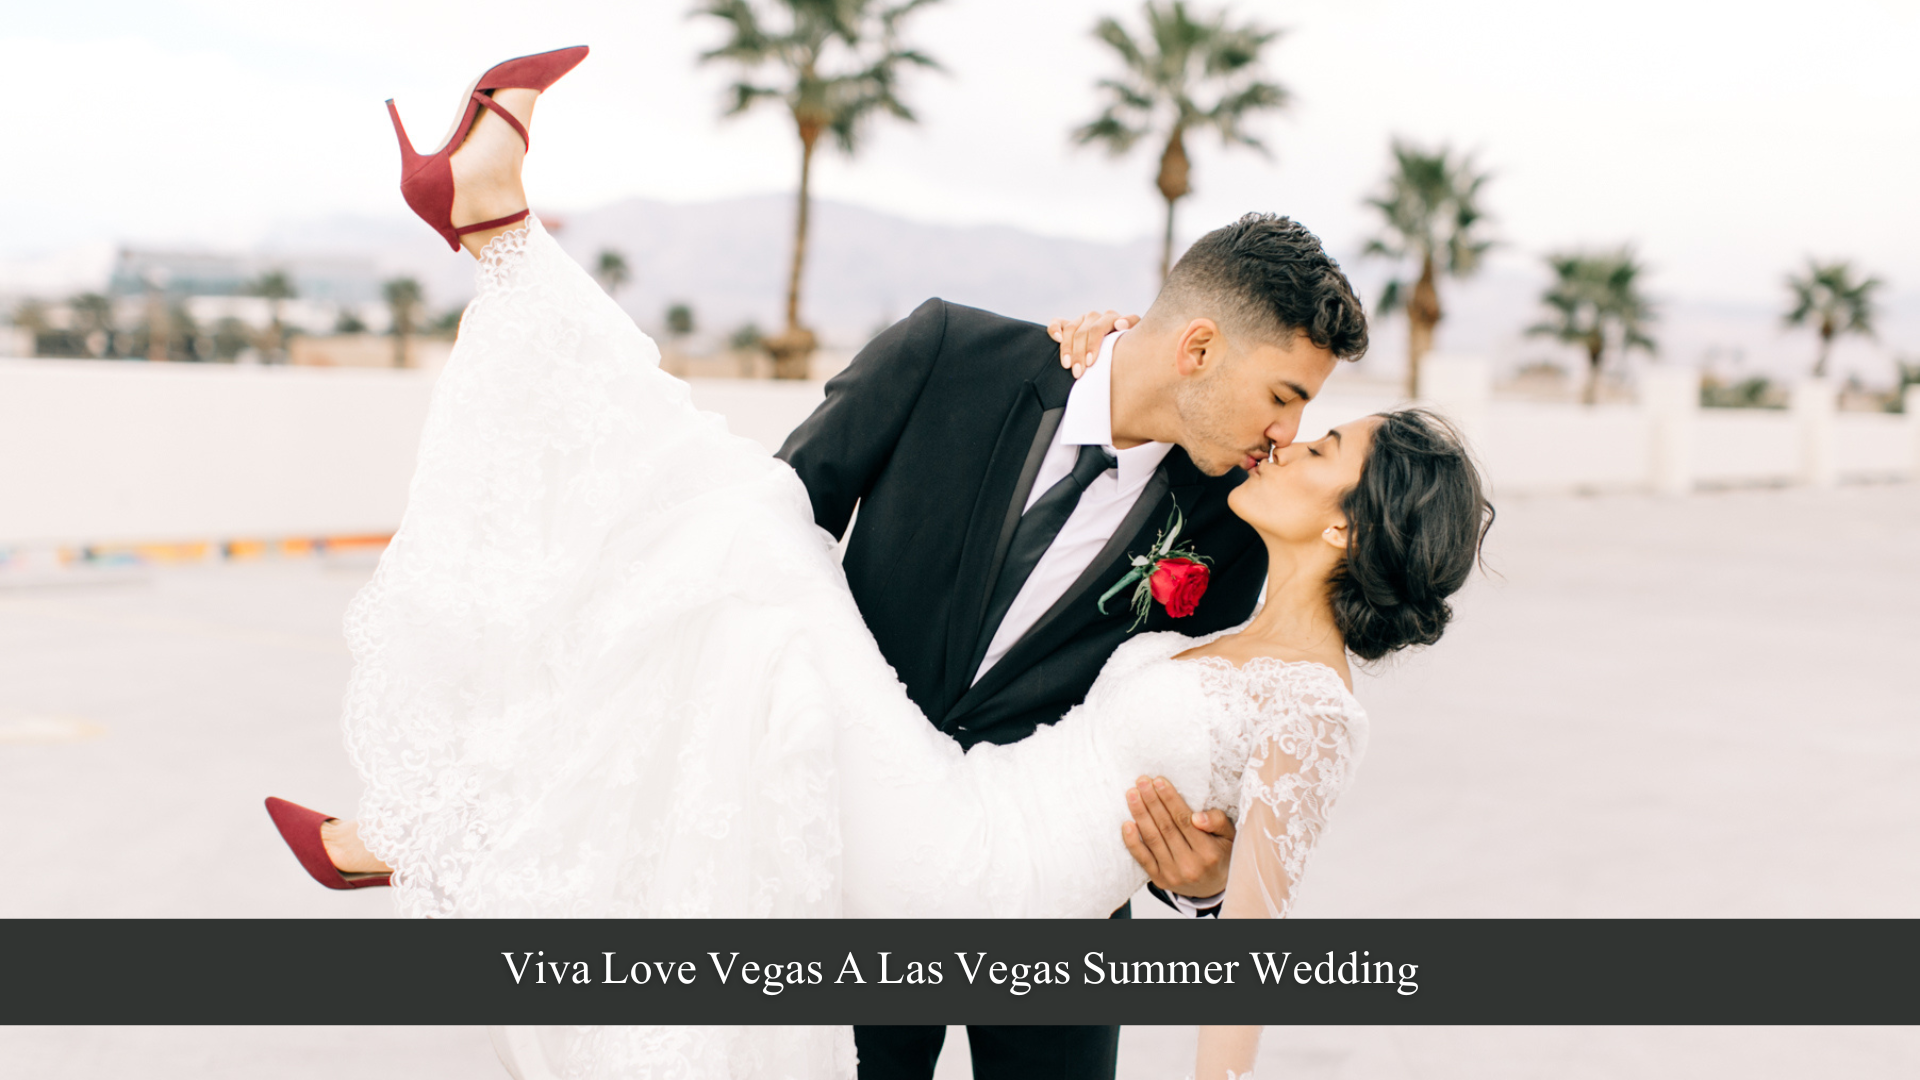 Viva Love Vegas! A Las Vegas Summer Wedding - Image